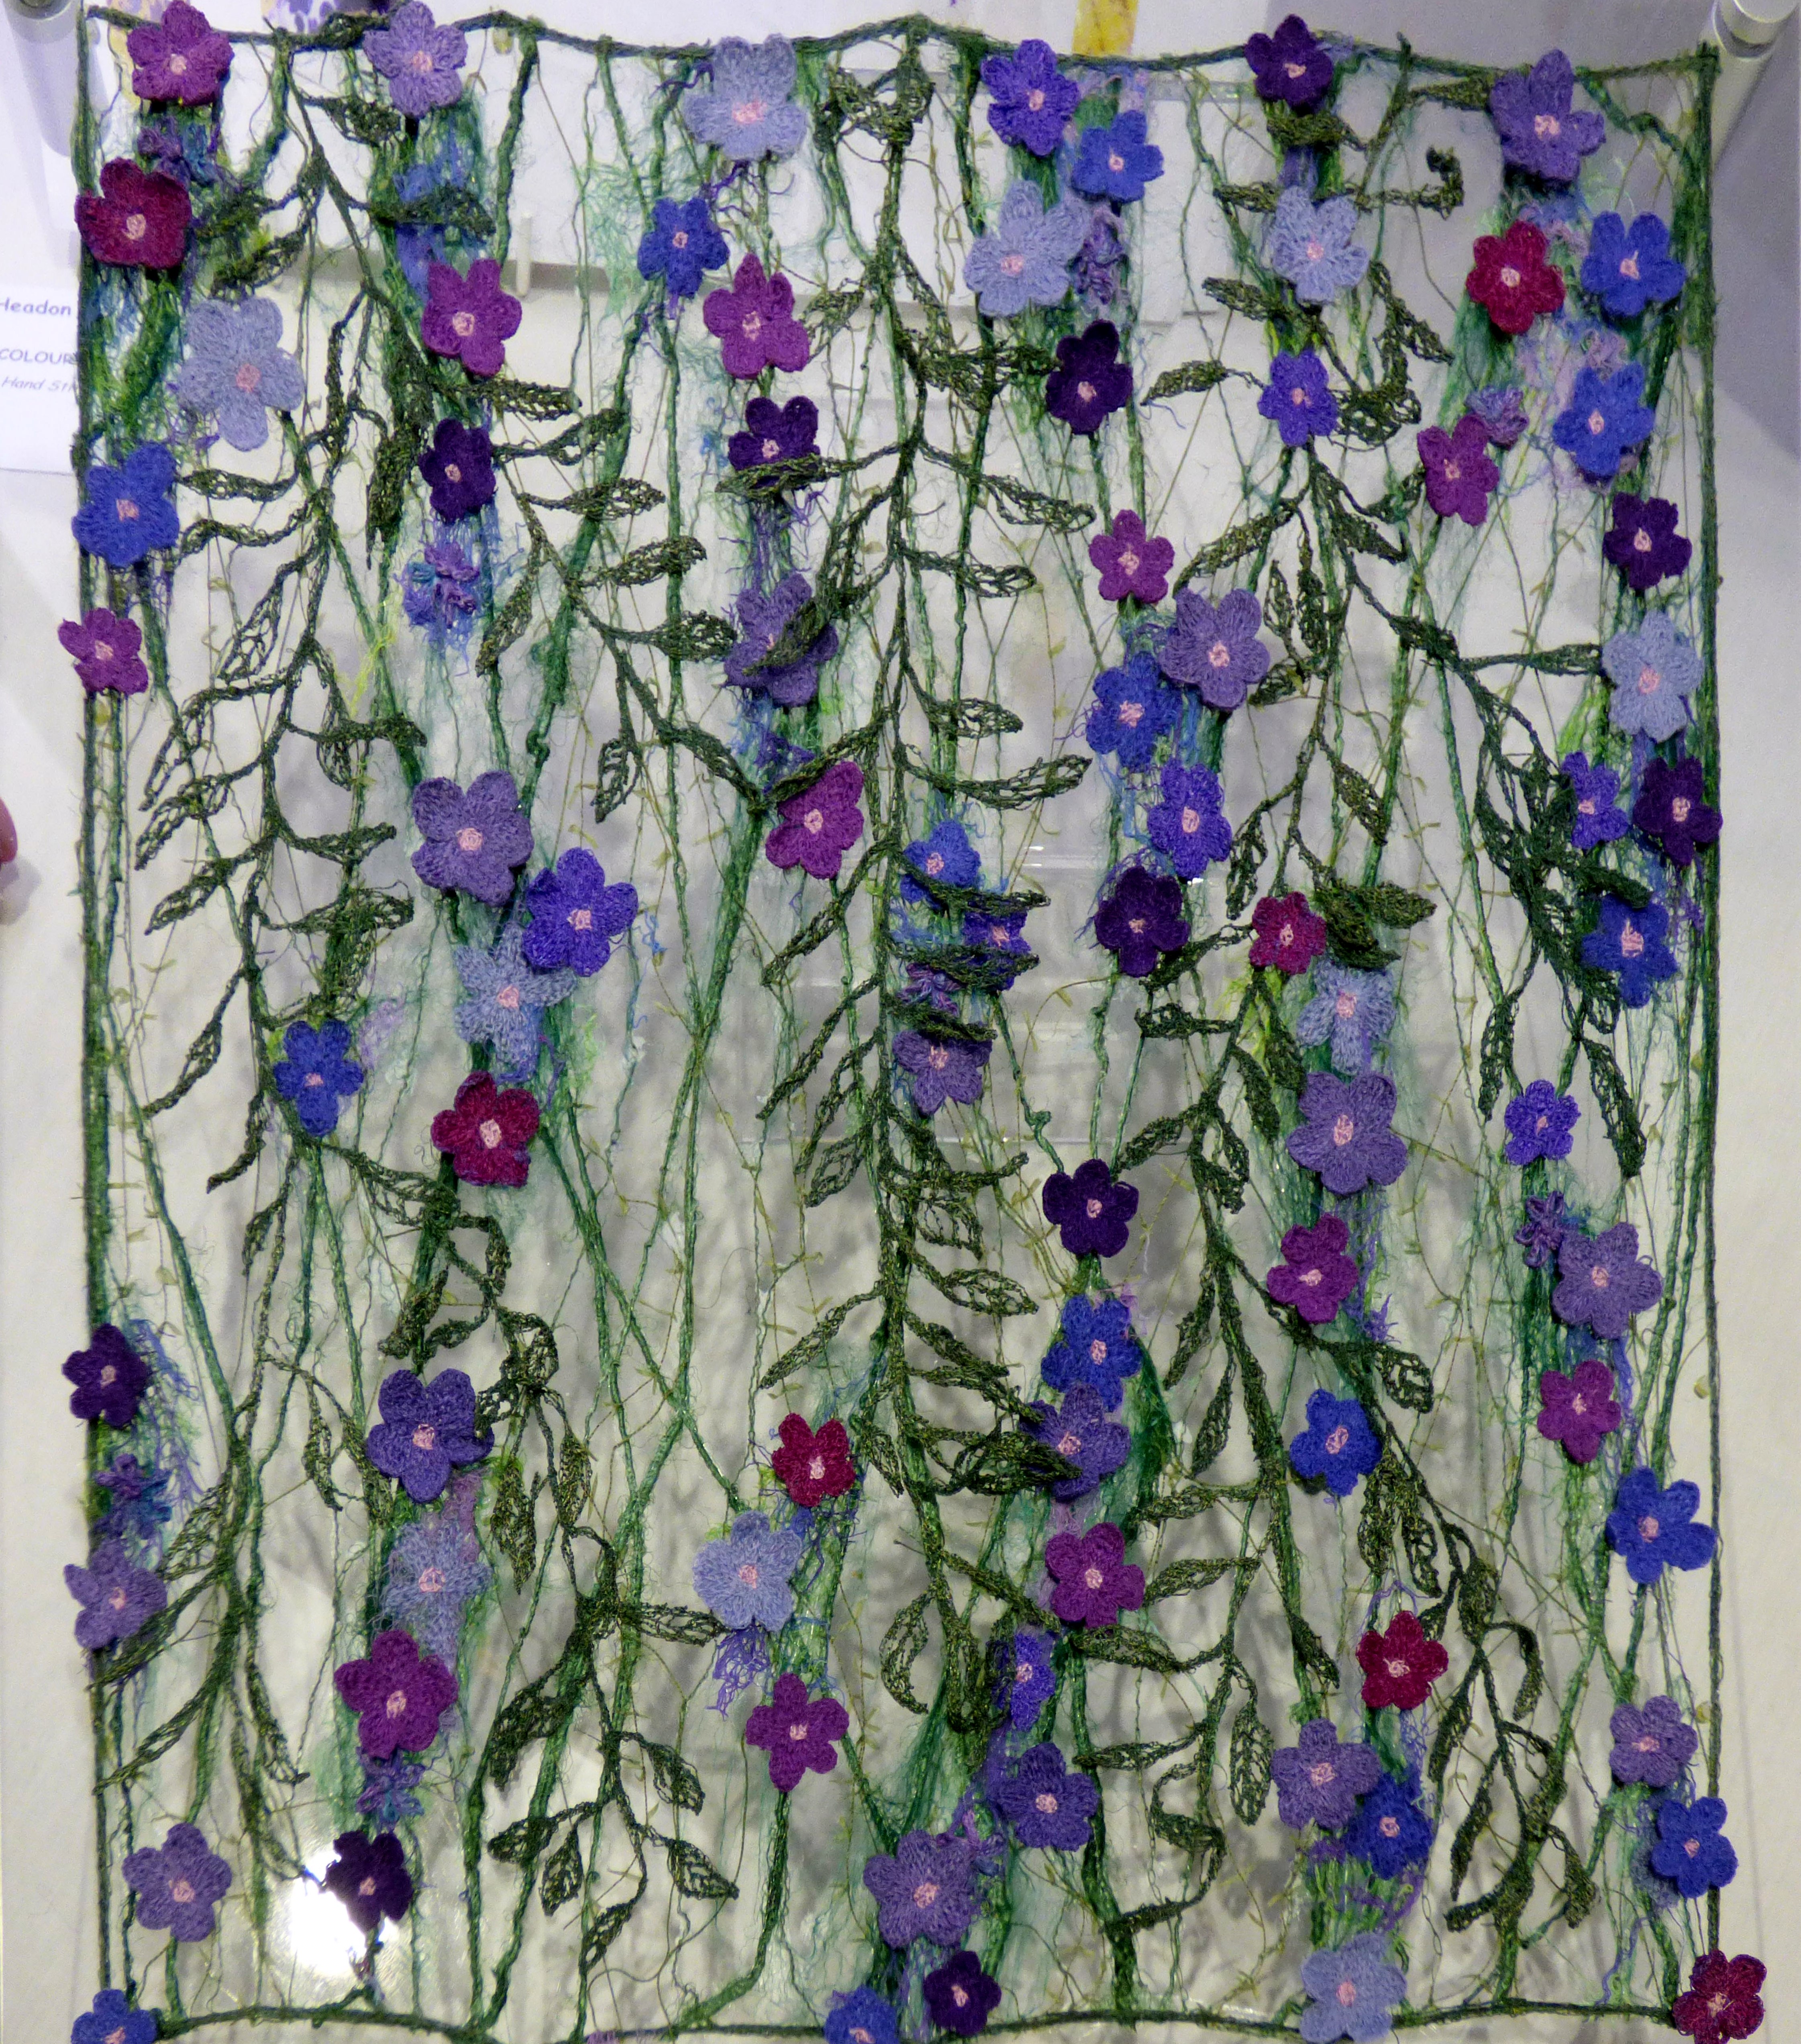 PURPLE FLOWERS by Moya McCarthy, N.Wales EG, free machine embroidery on dissolvable fabric